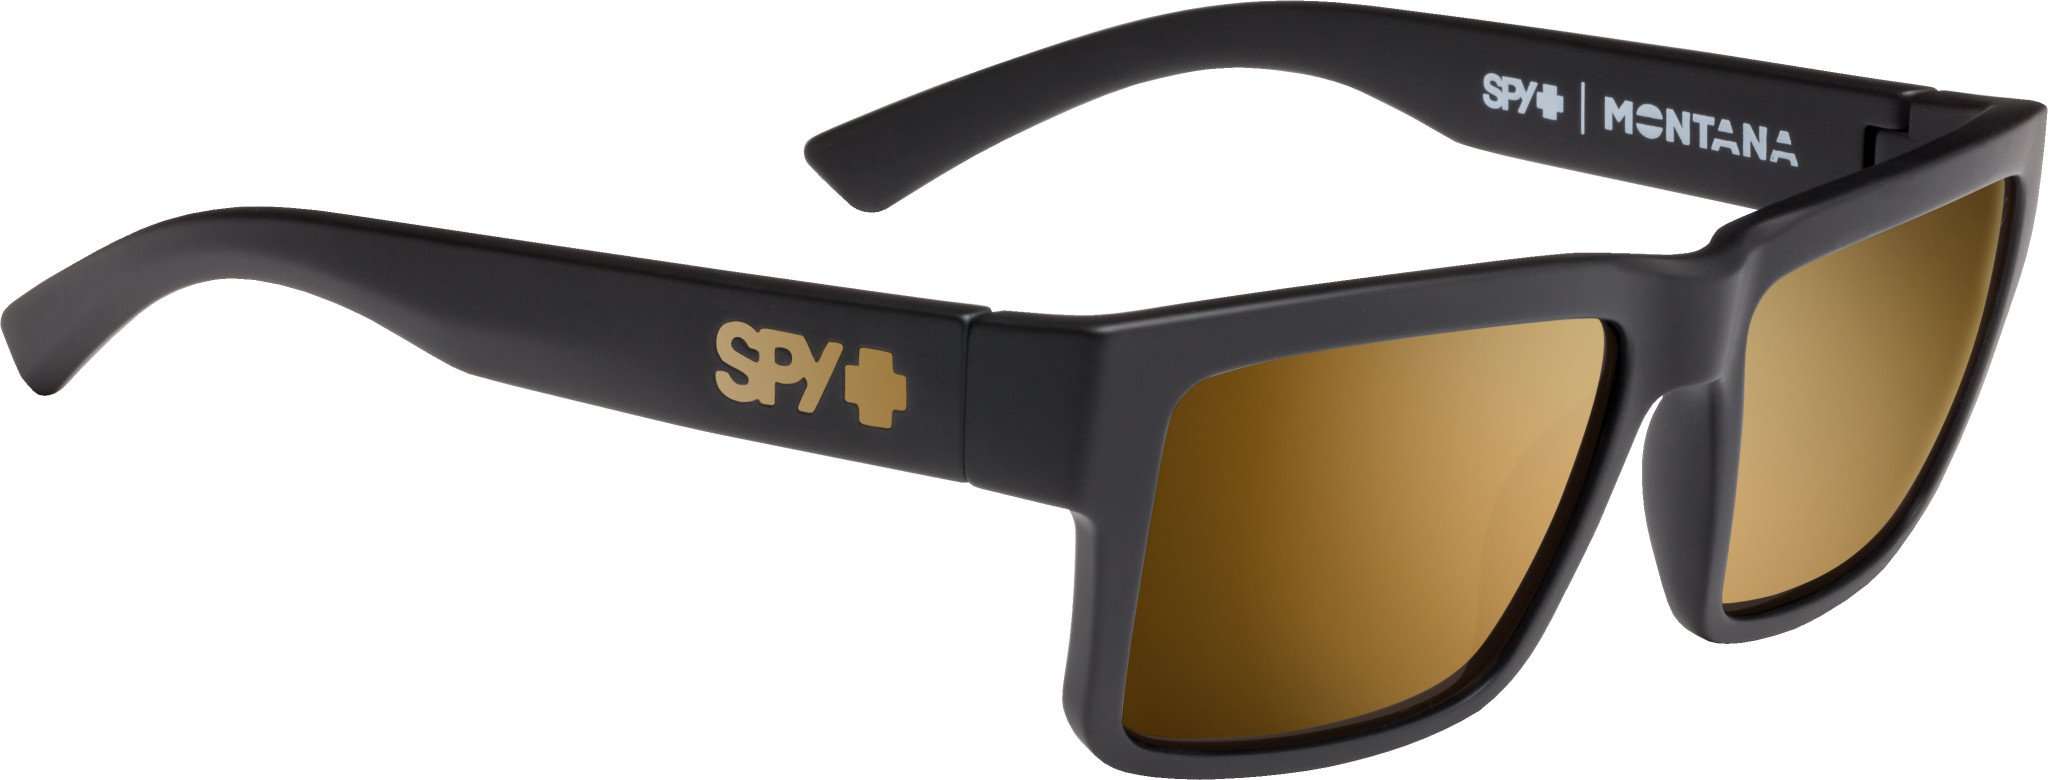 Spy Montana Soft Matte Black | Hd Plus Bronze With Gold Spectra Mirror